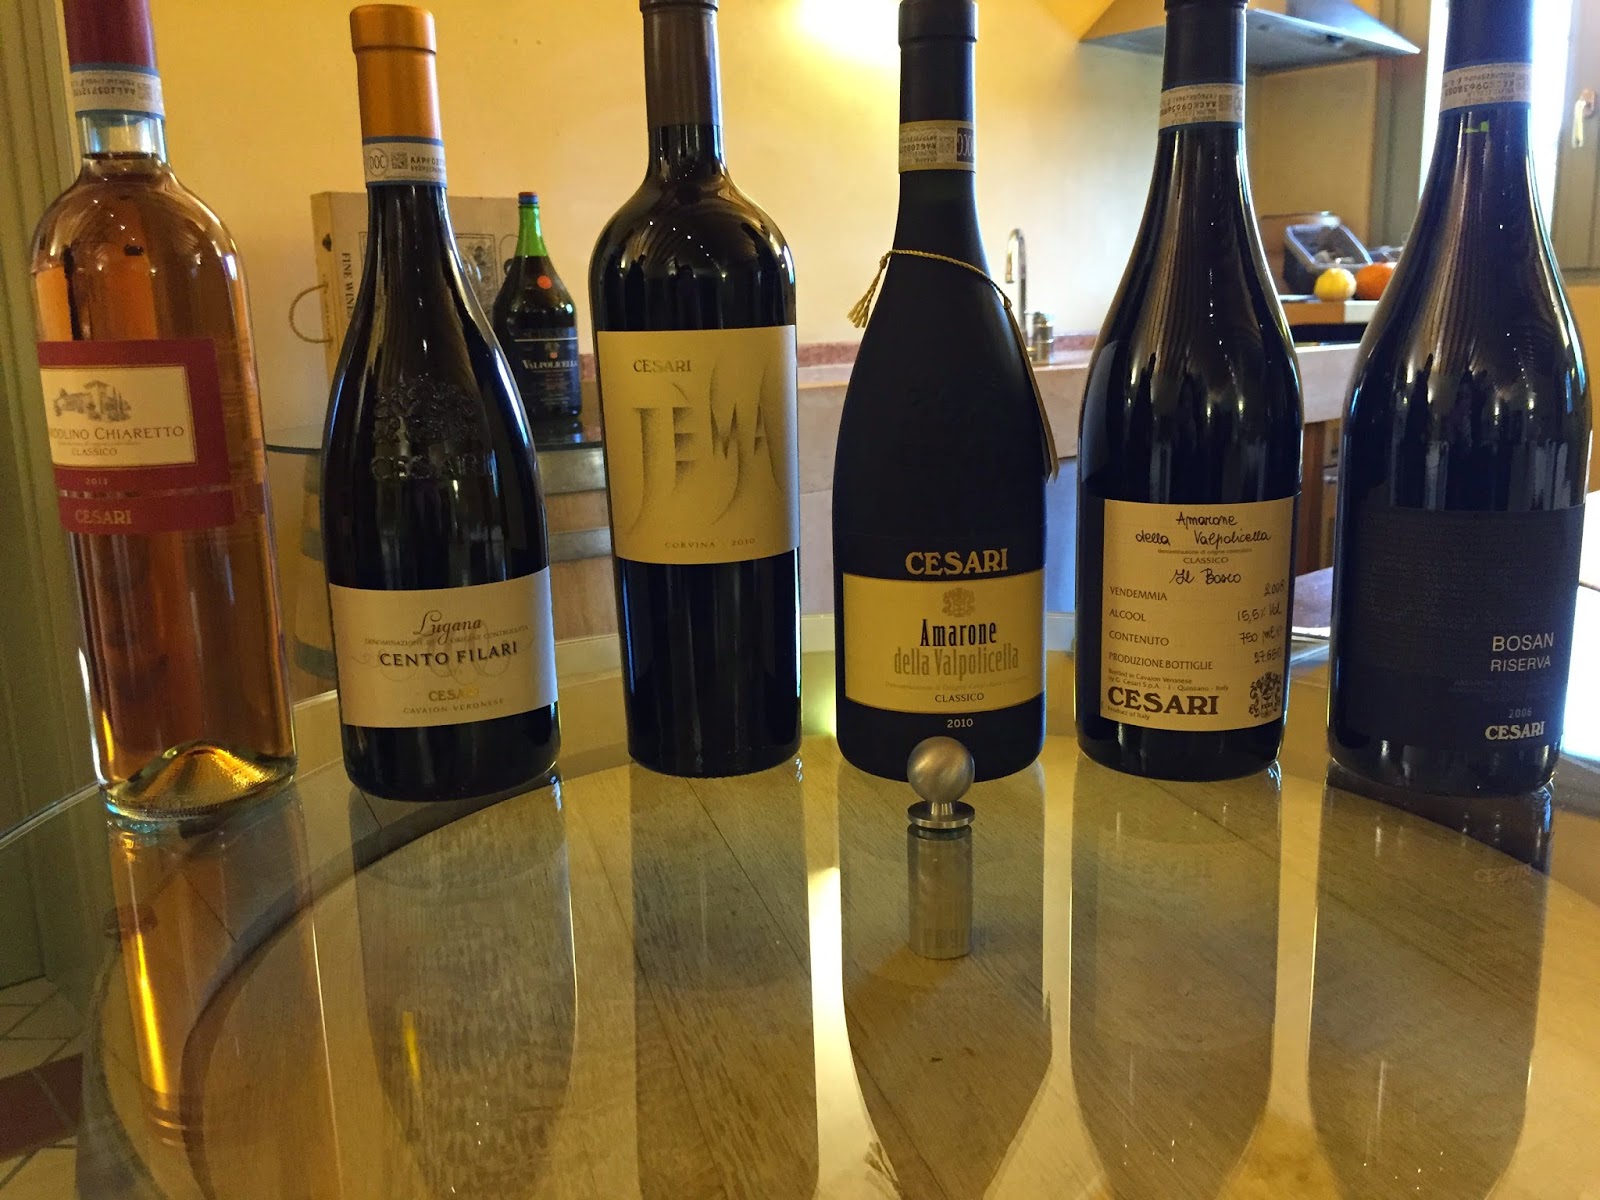 Wines of Cesari winery in Valpolicella